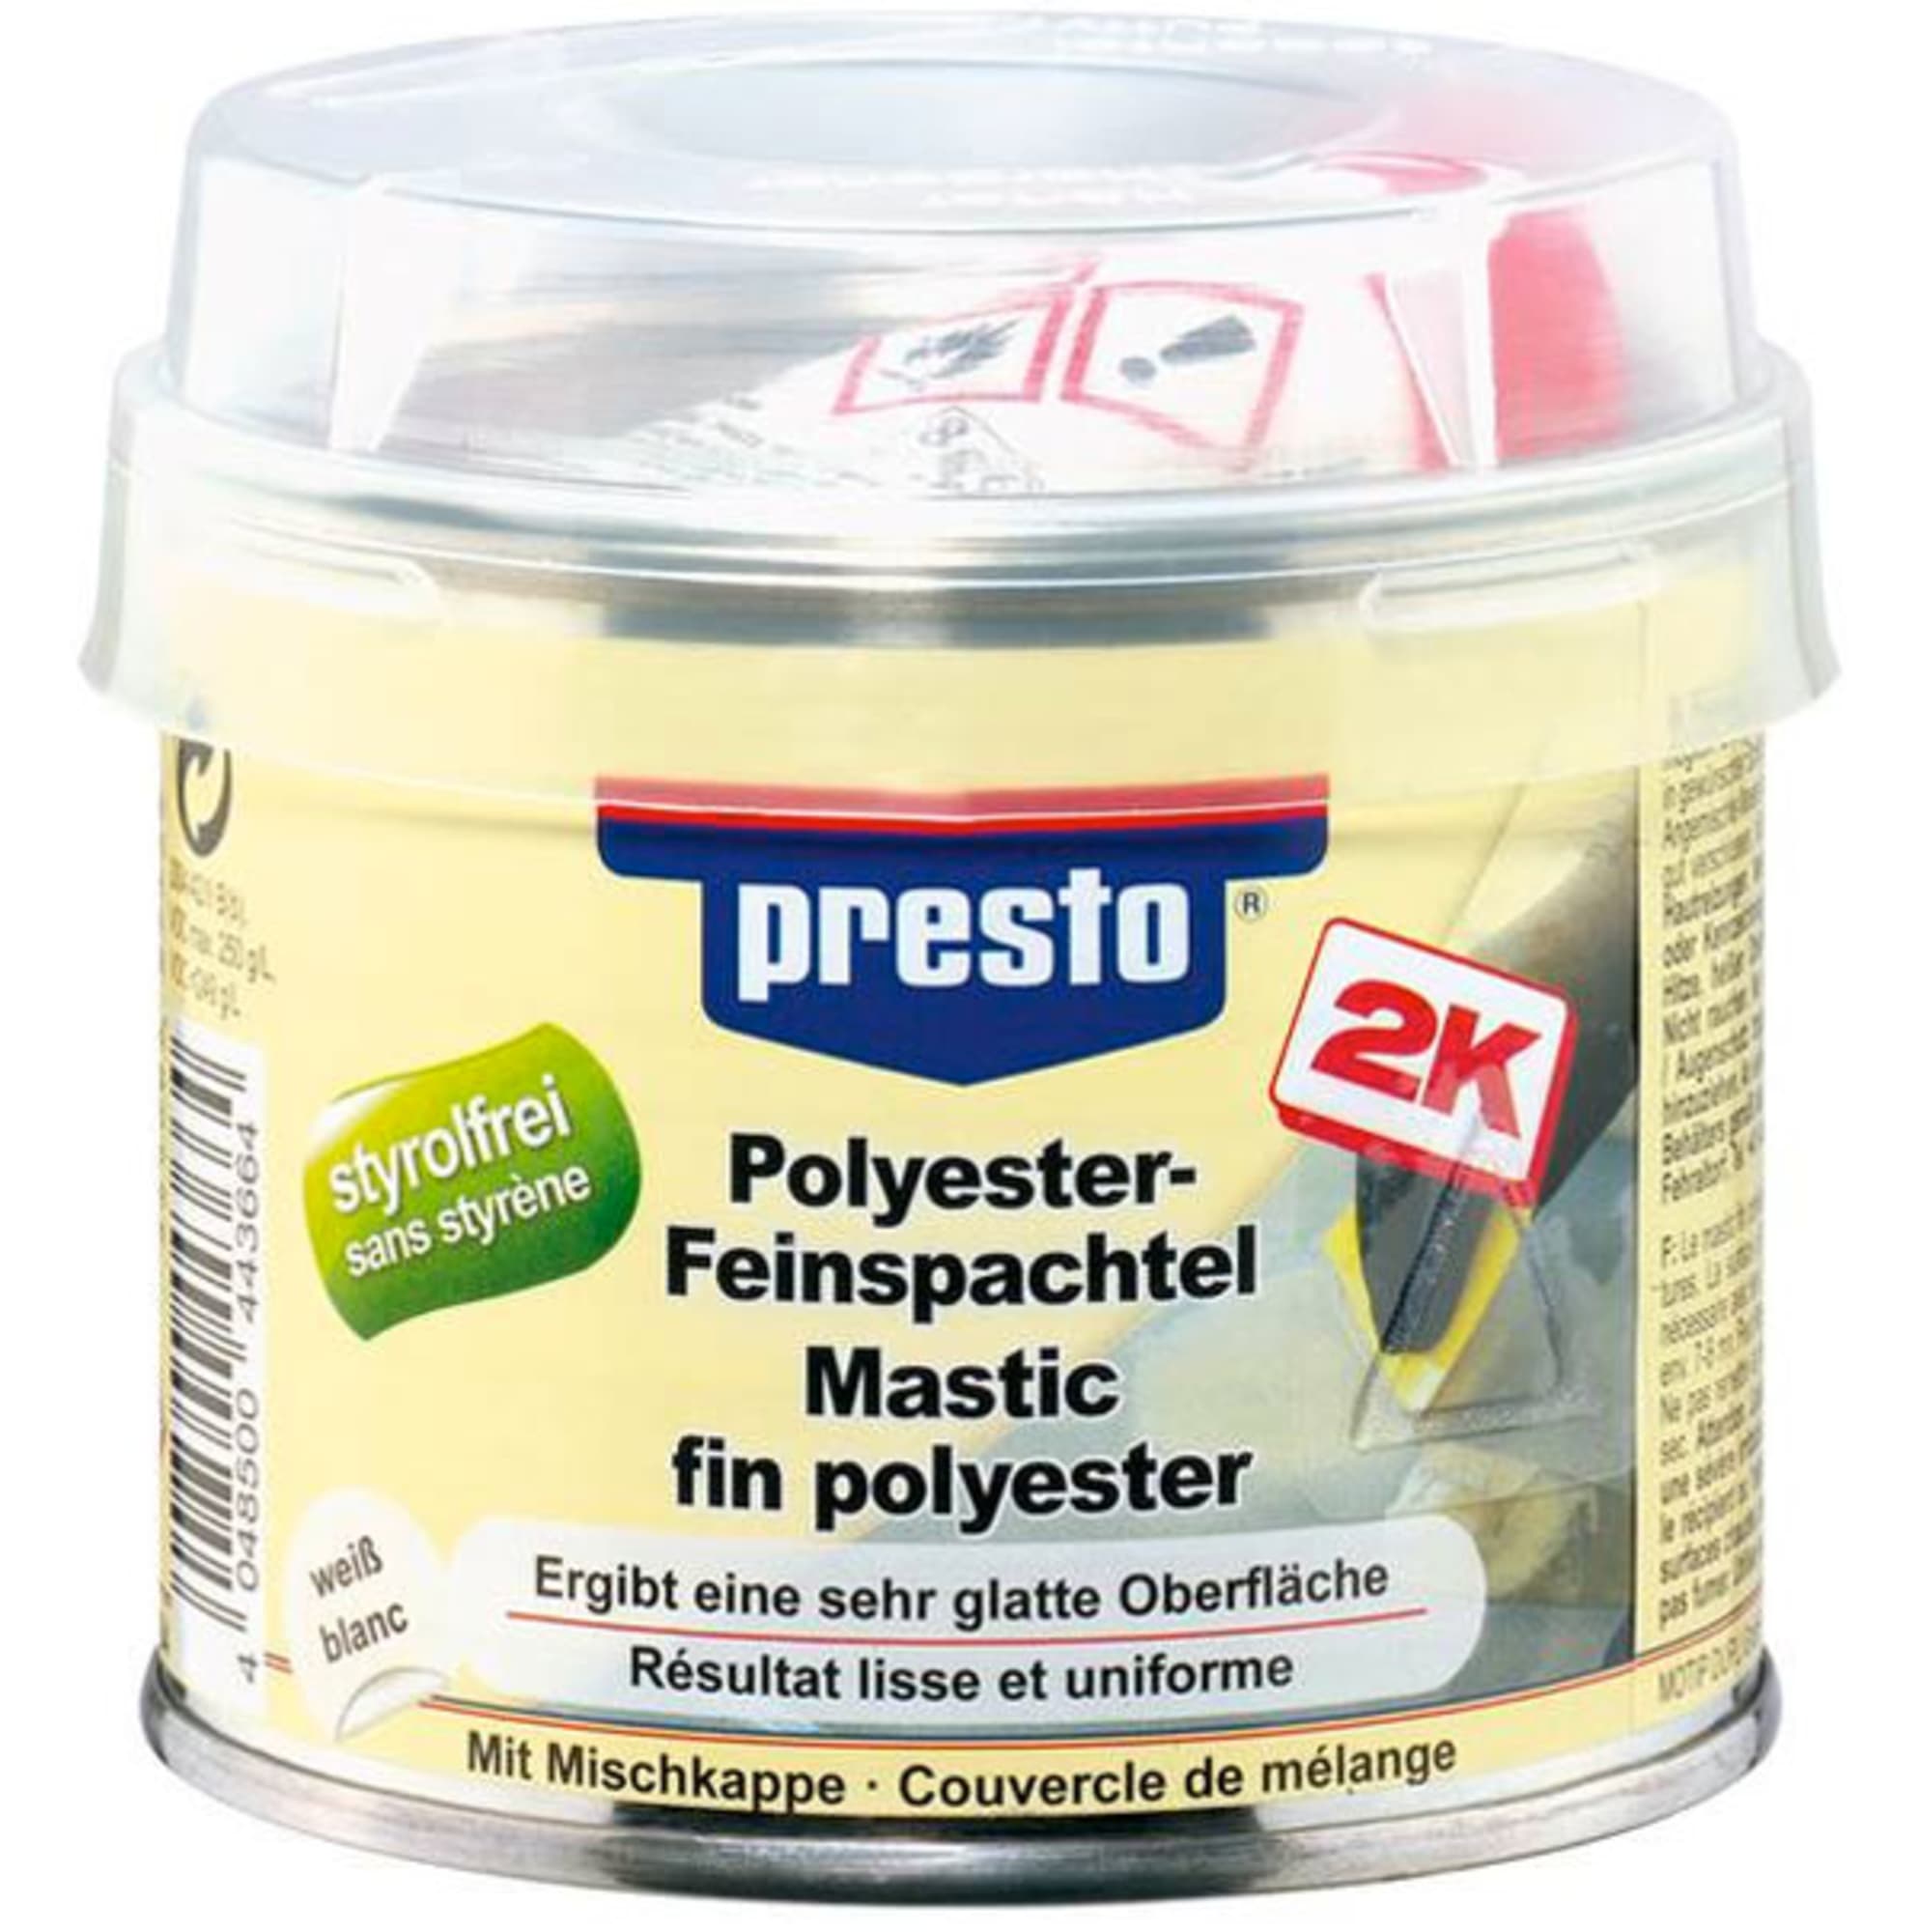 Presto SF Polyester-Feinspachtel styrolfrei